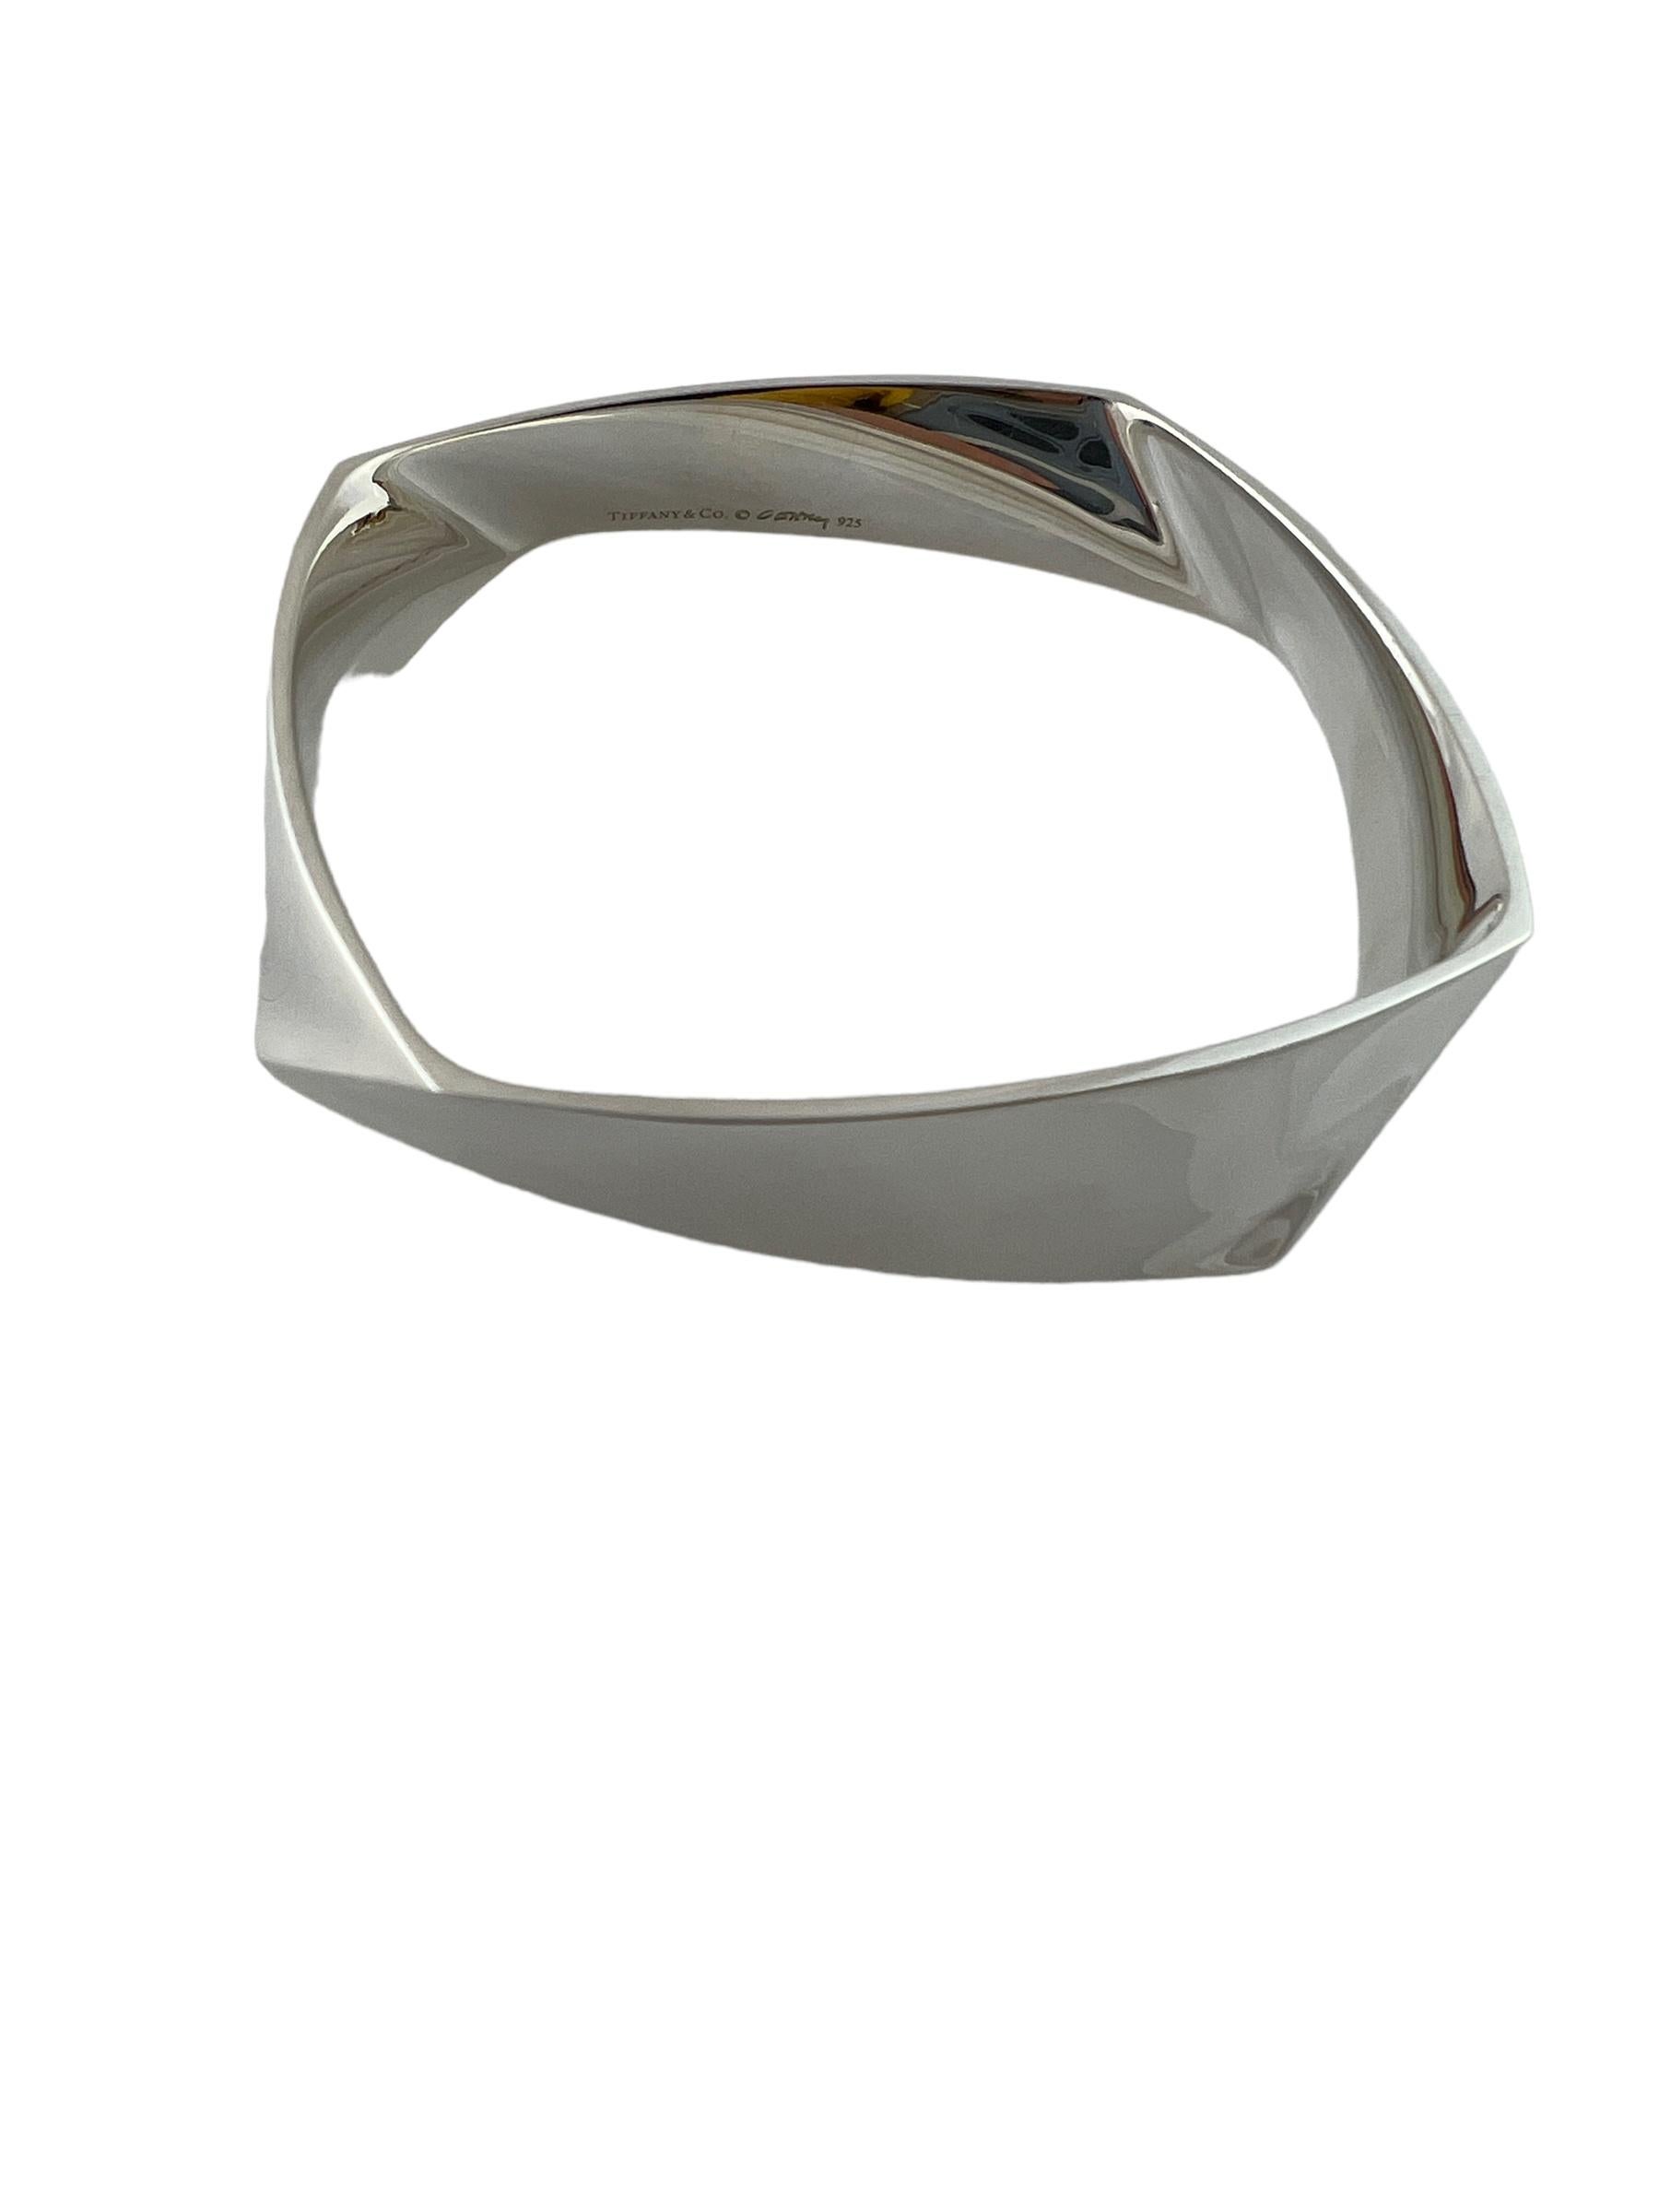 Women's Tiffany & Co. Frank Gehry Sterling Silver Torque Bangle Bracelet